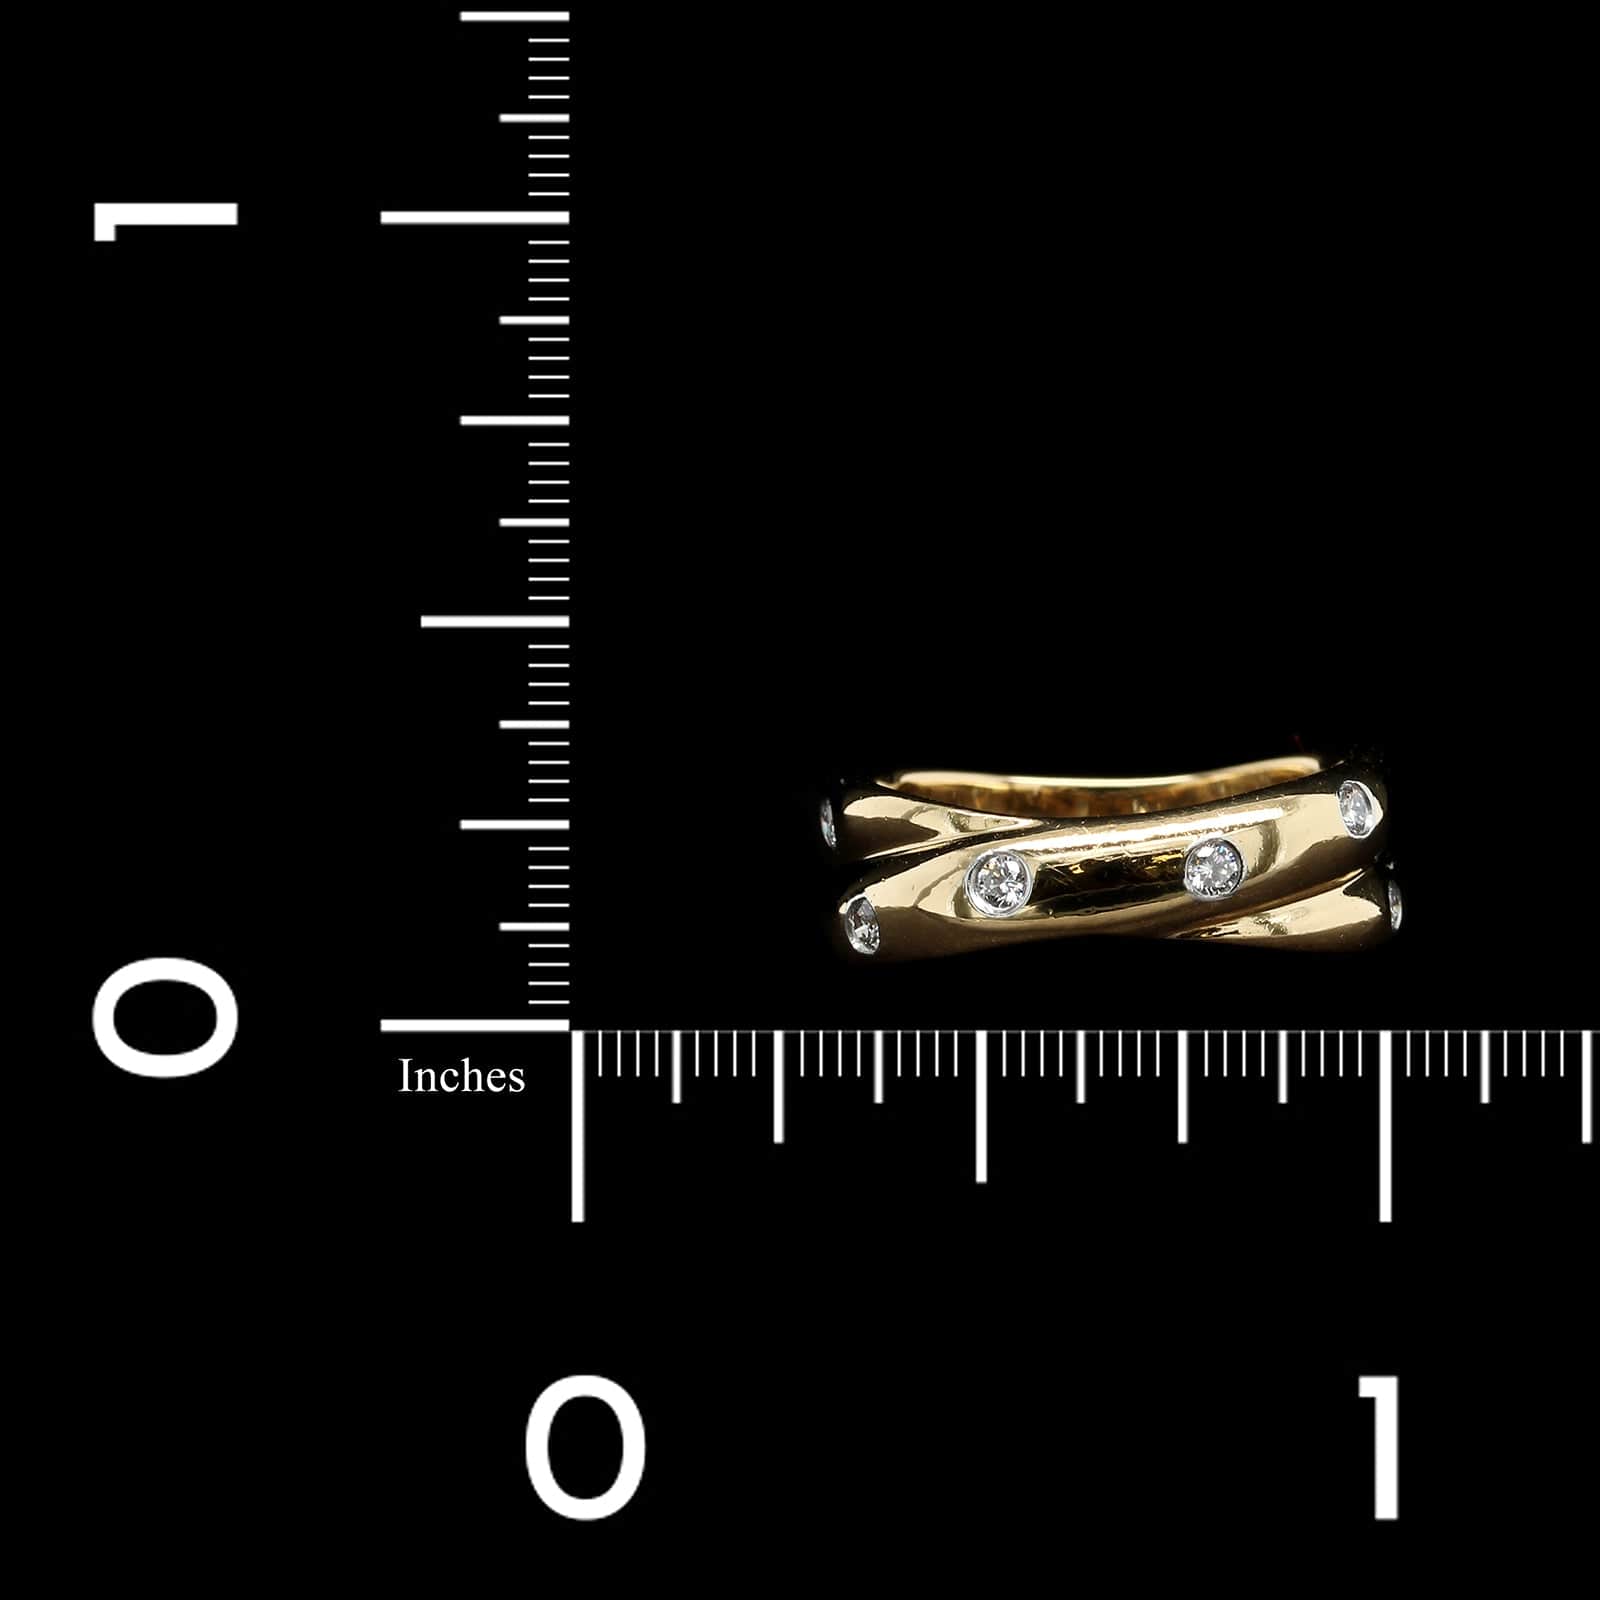 Tiffany & Co. 18K Yellow Gold and Platinum Diamond Estate Etoile Ring